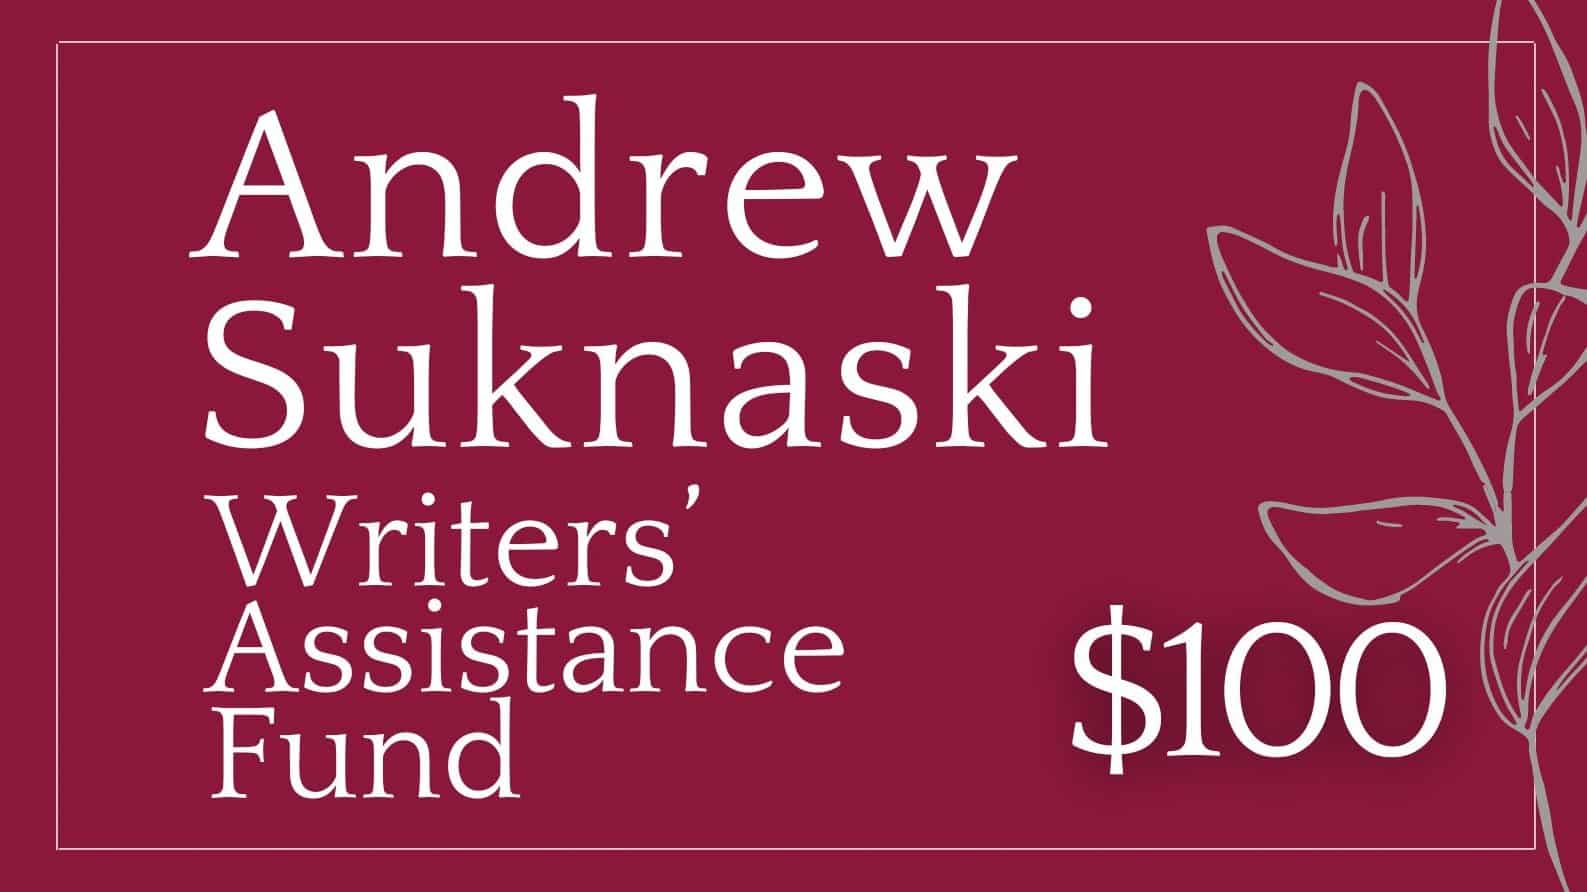 Andrew Suknaski Writers’ Assistance  Fund supporting image.